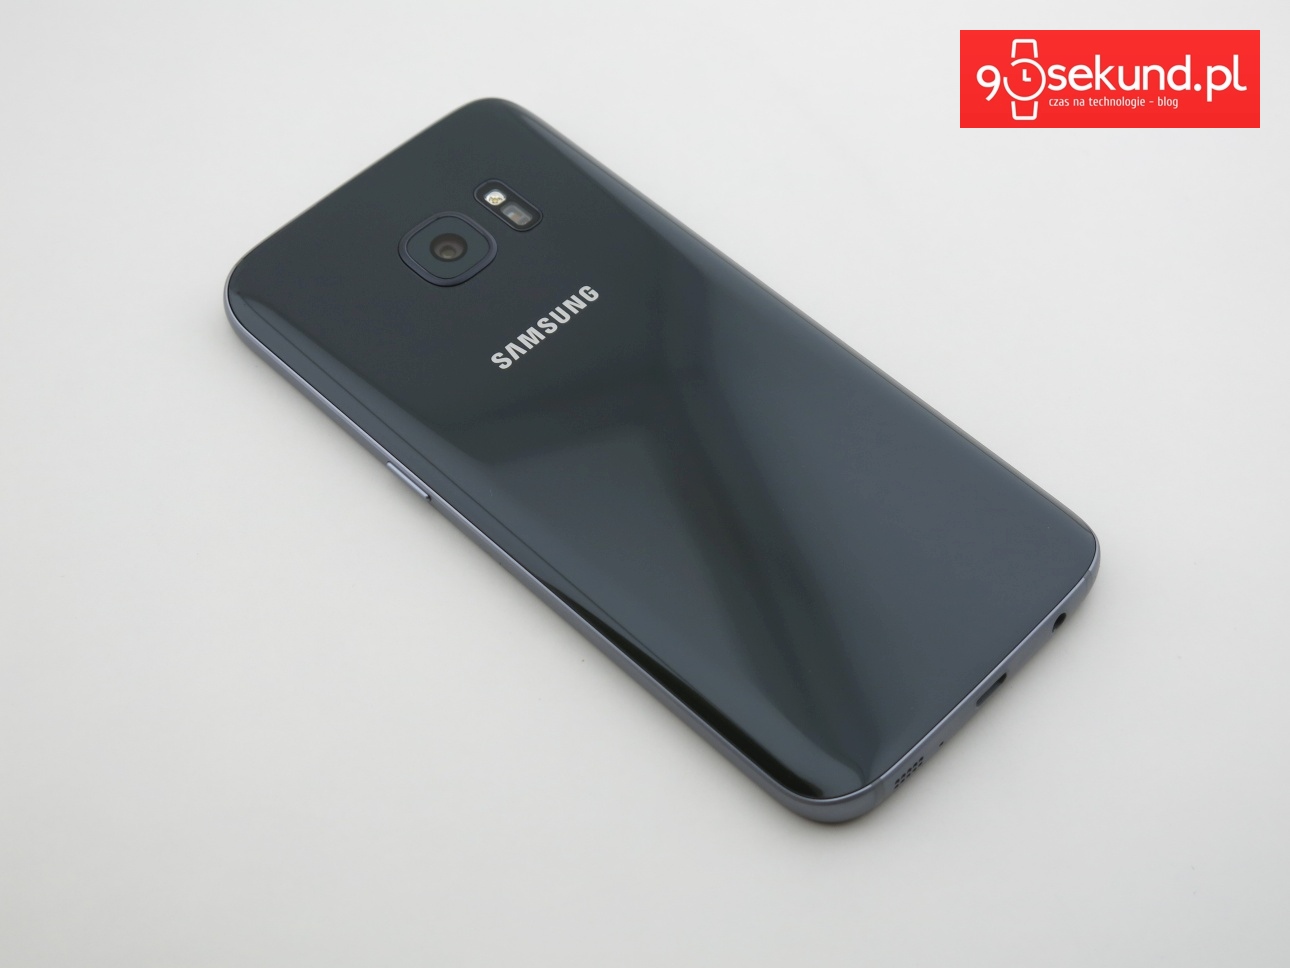 Samsung Galaxy S7 SM-G930 - recenzja 90sekund.pl